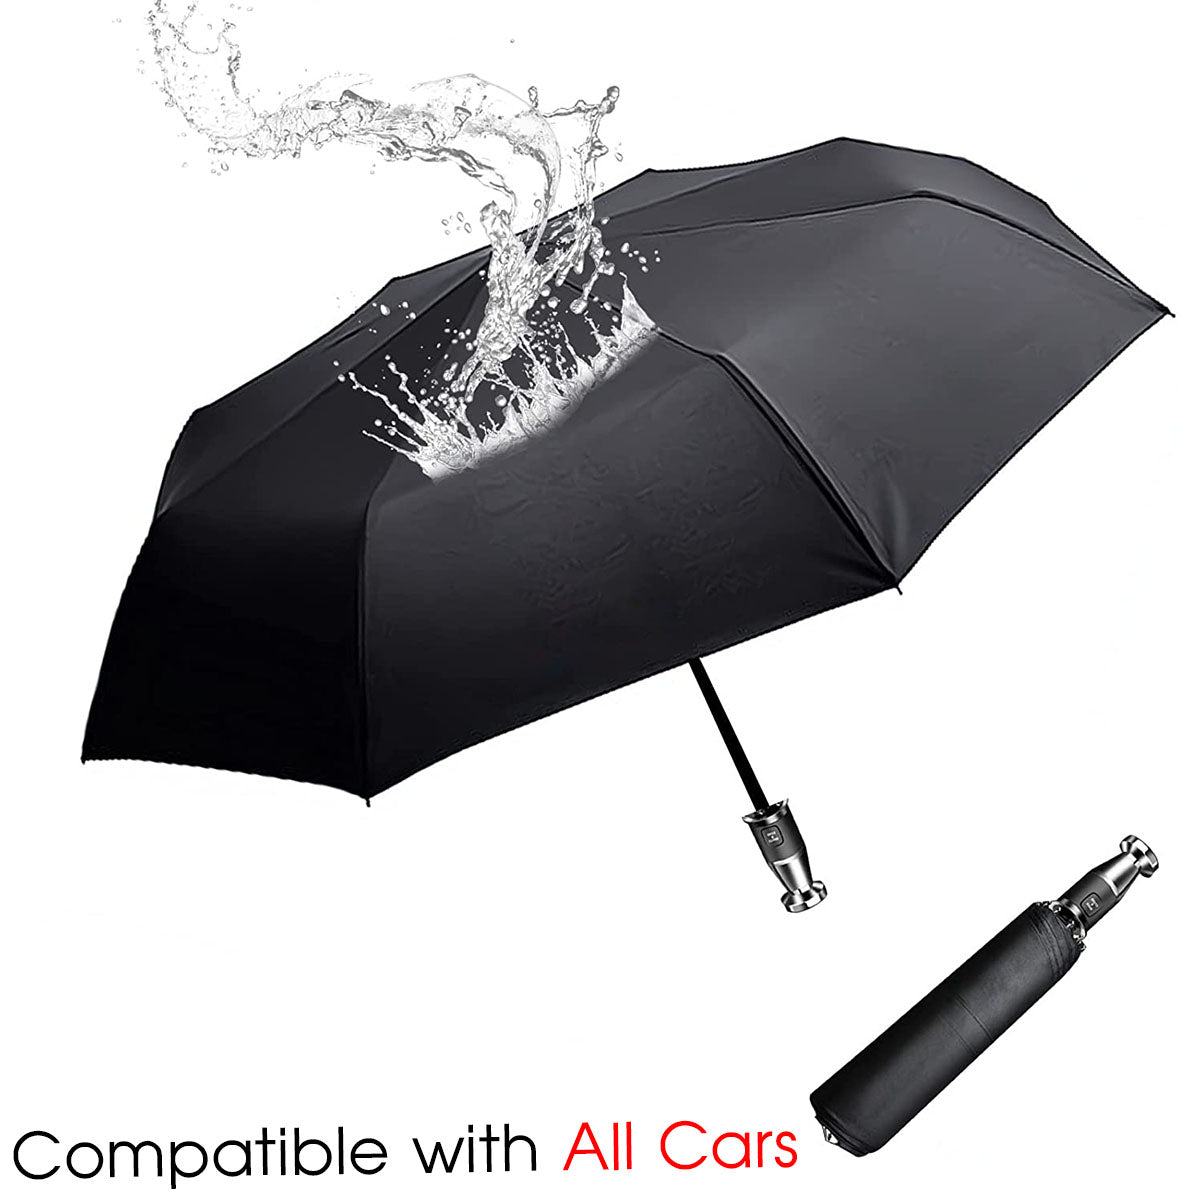 Umbrella for All Cars, 10 Ribs Umbrella Windproof Automatic Folding Umbrella, One-handed use, Rain and Sun Protection, Car Accessories PE13993